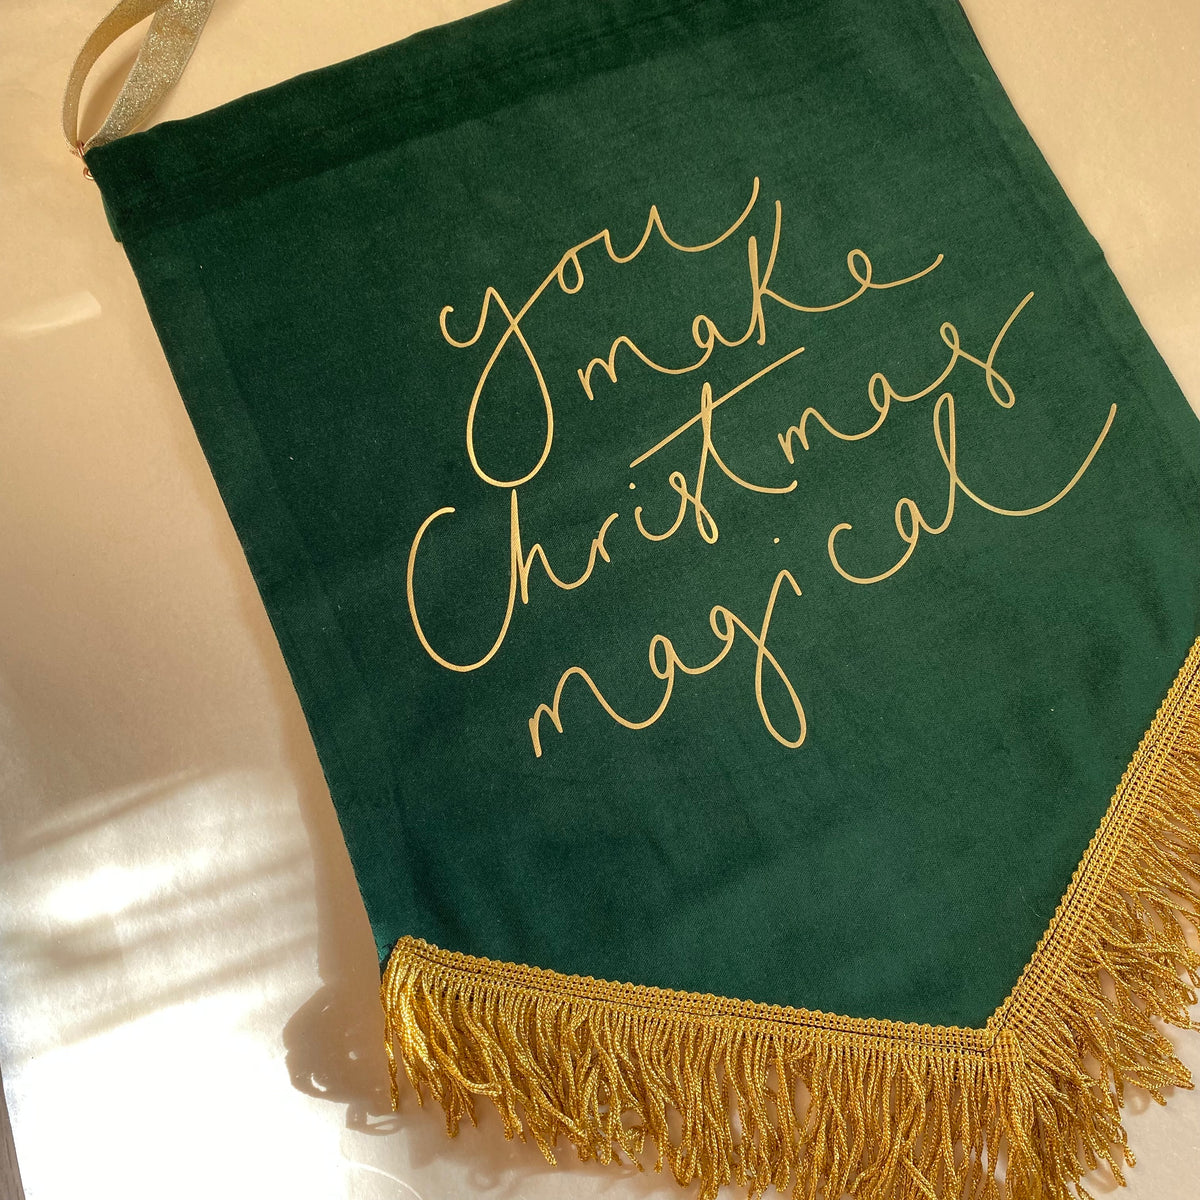 'You Make Christmas Magical' - Christmas Velvet Banner